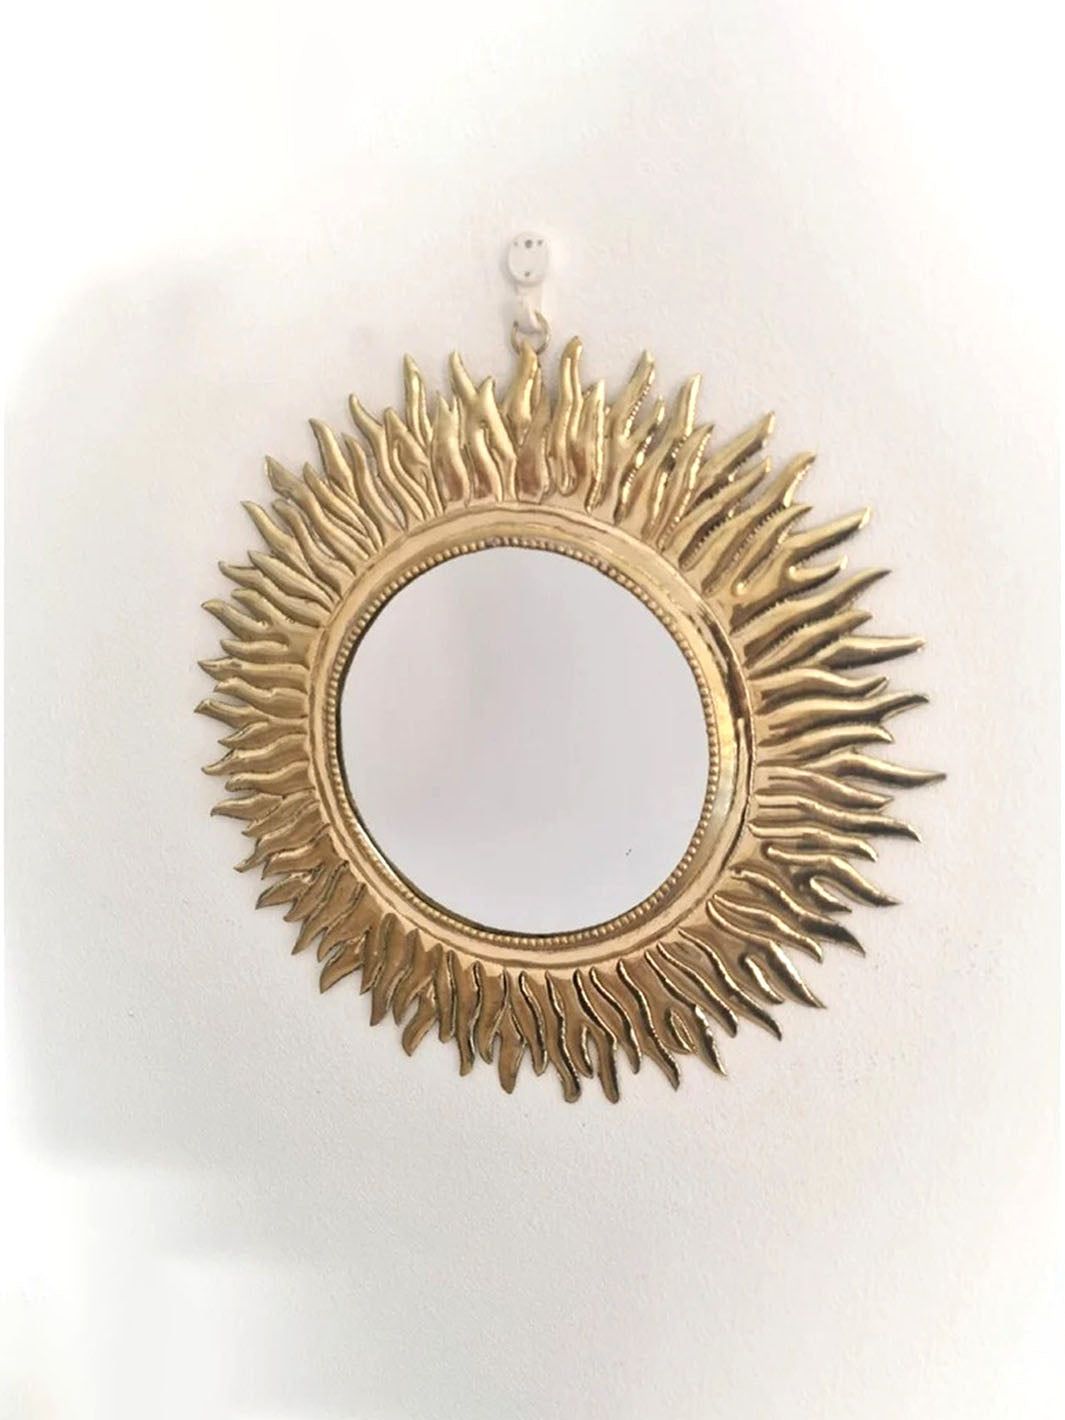 Handcrafted Brass Sun Wall Circle Mirror Libitii Mirrors LIB-0127-2